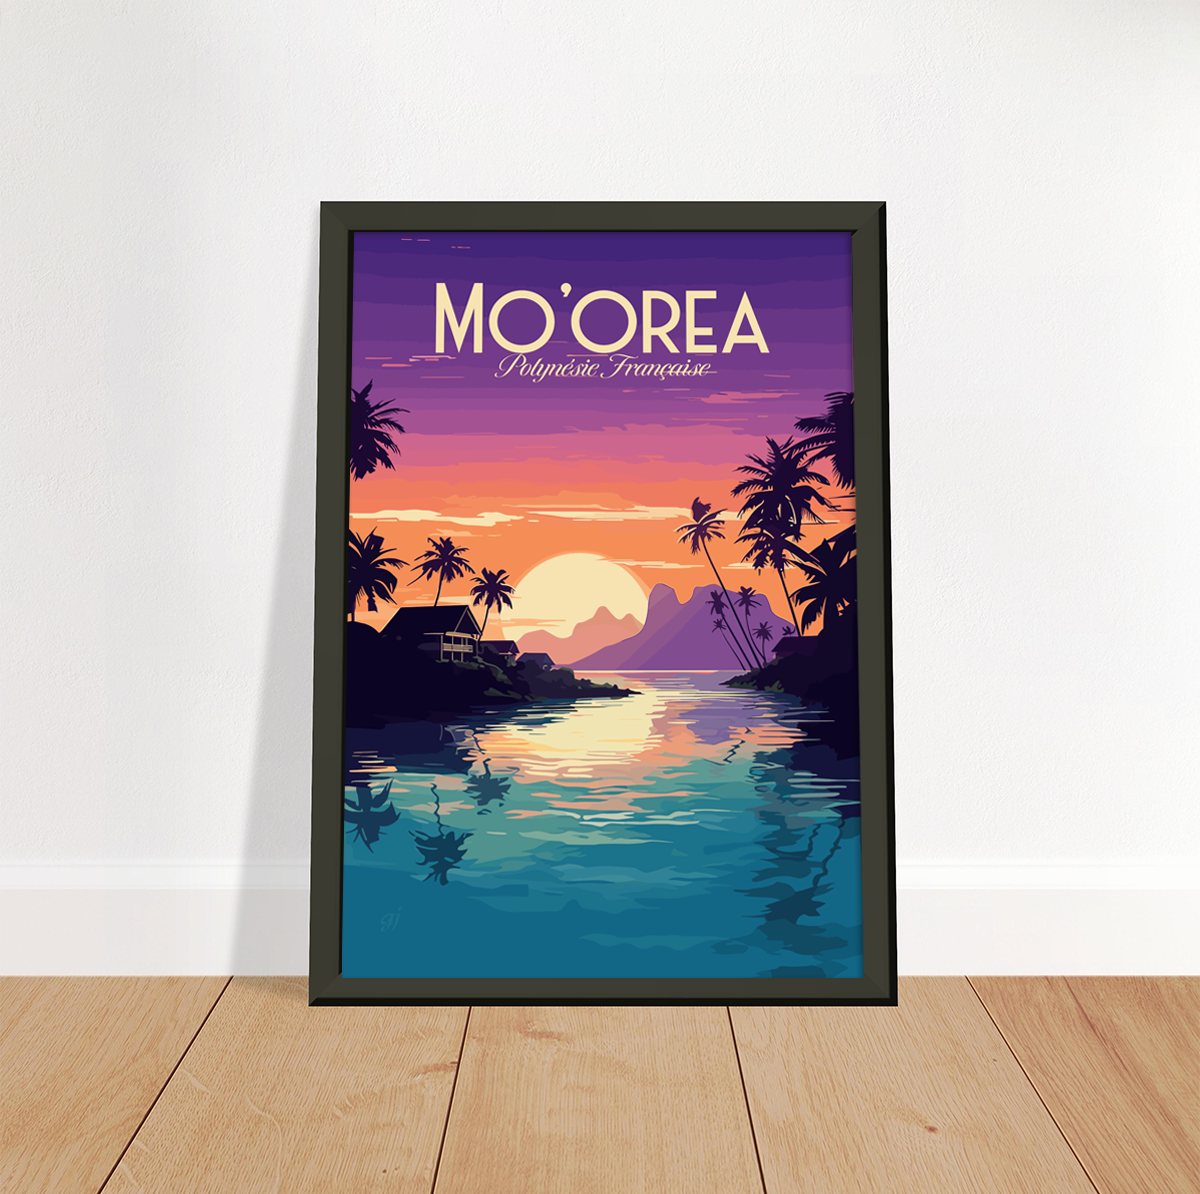 Mo’orea poster by bon voyage design